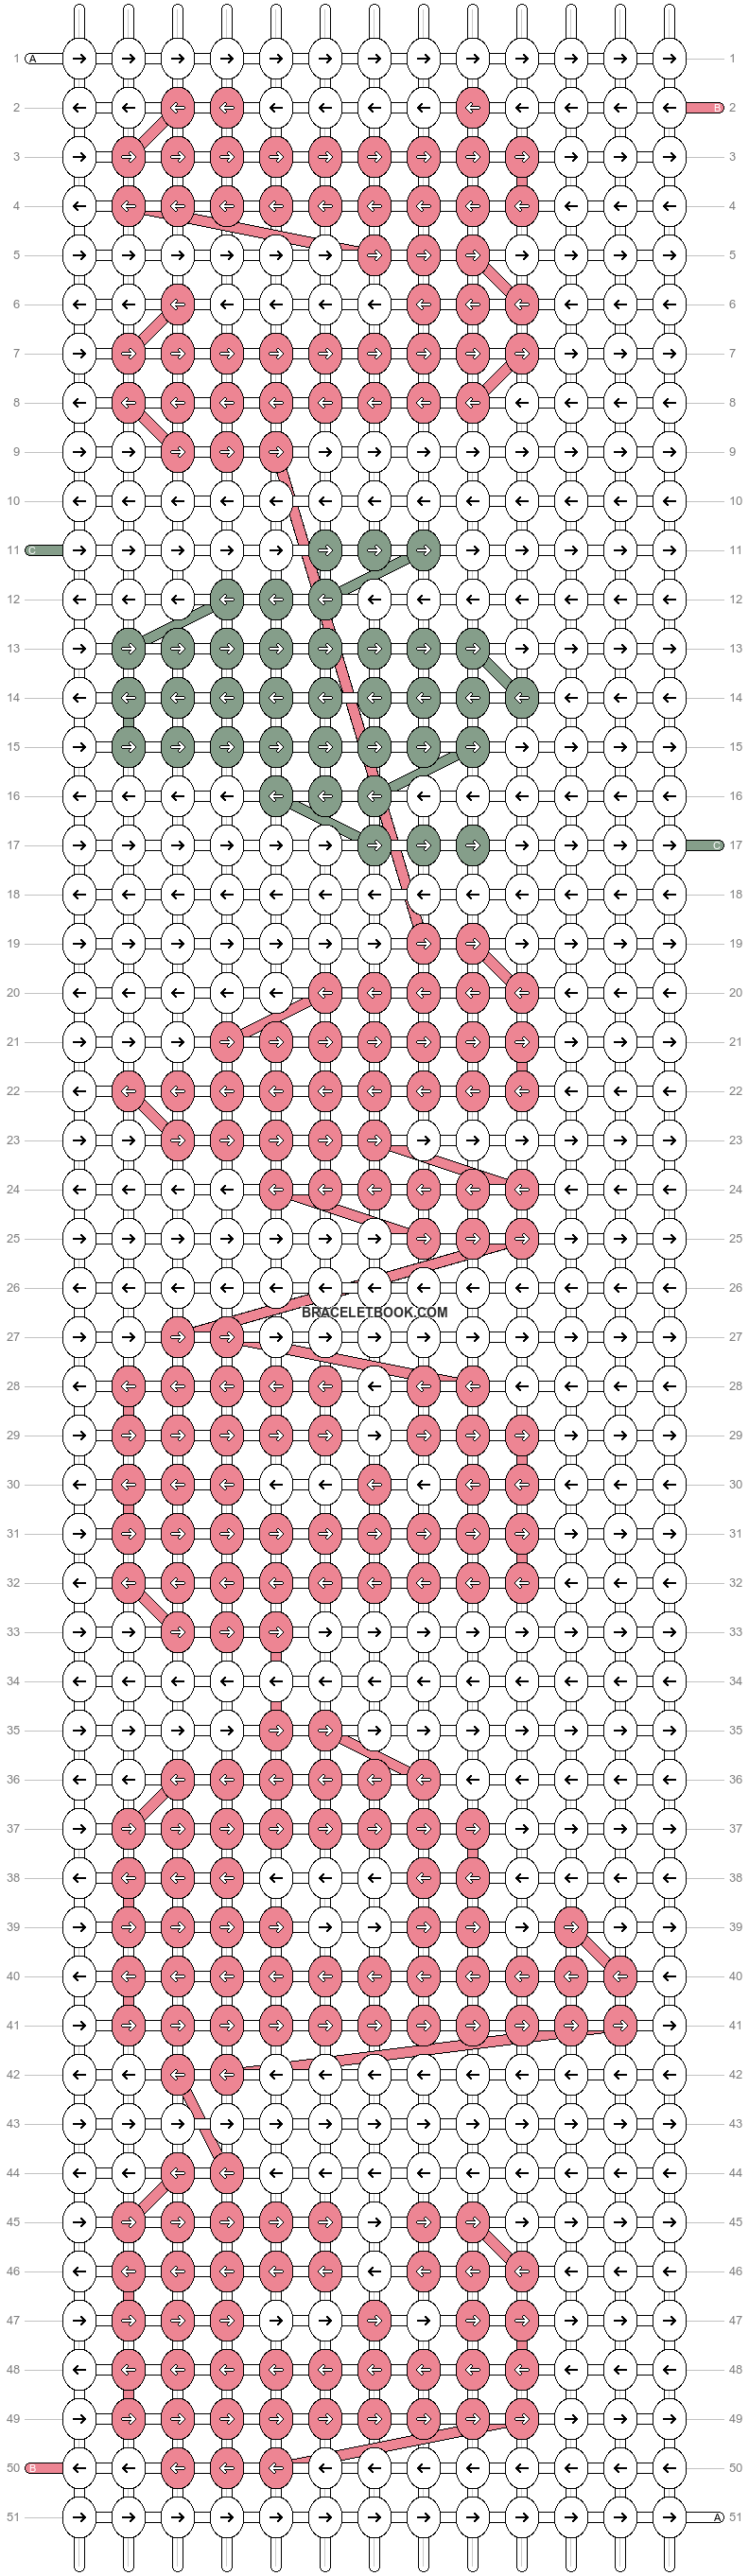 Alpha pattern #54512 pattern